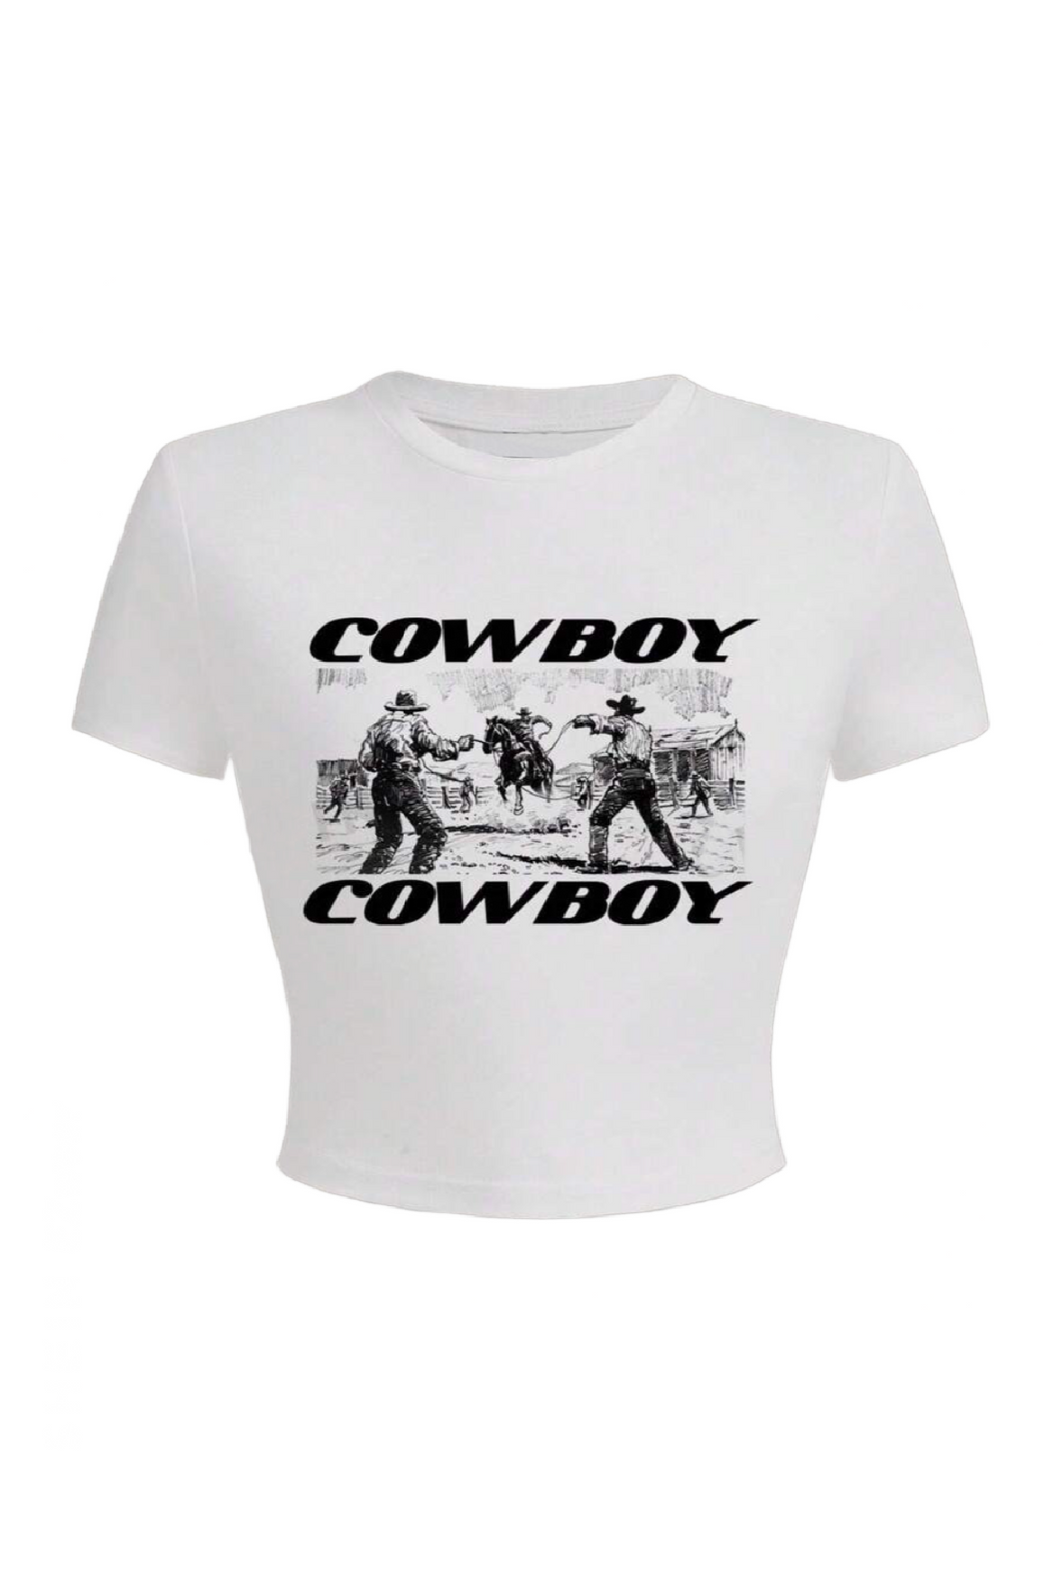 Cowboy Crop Top (White)